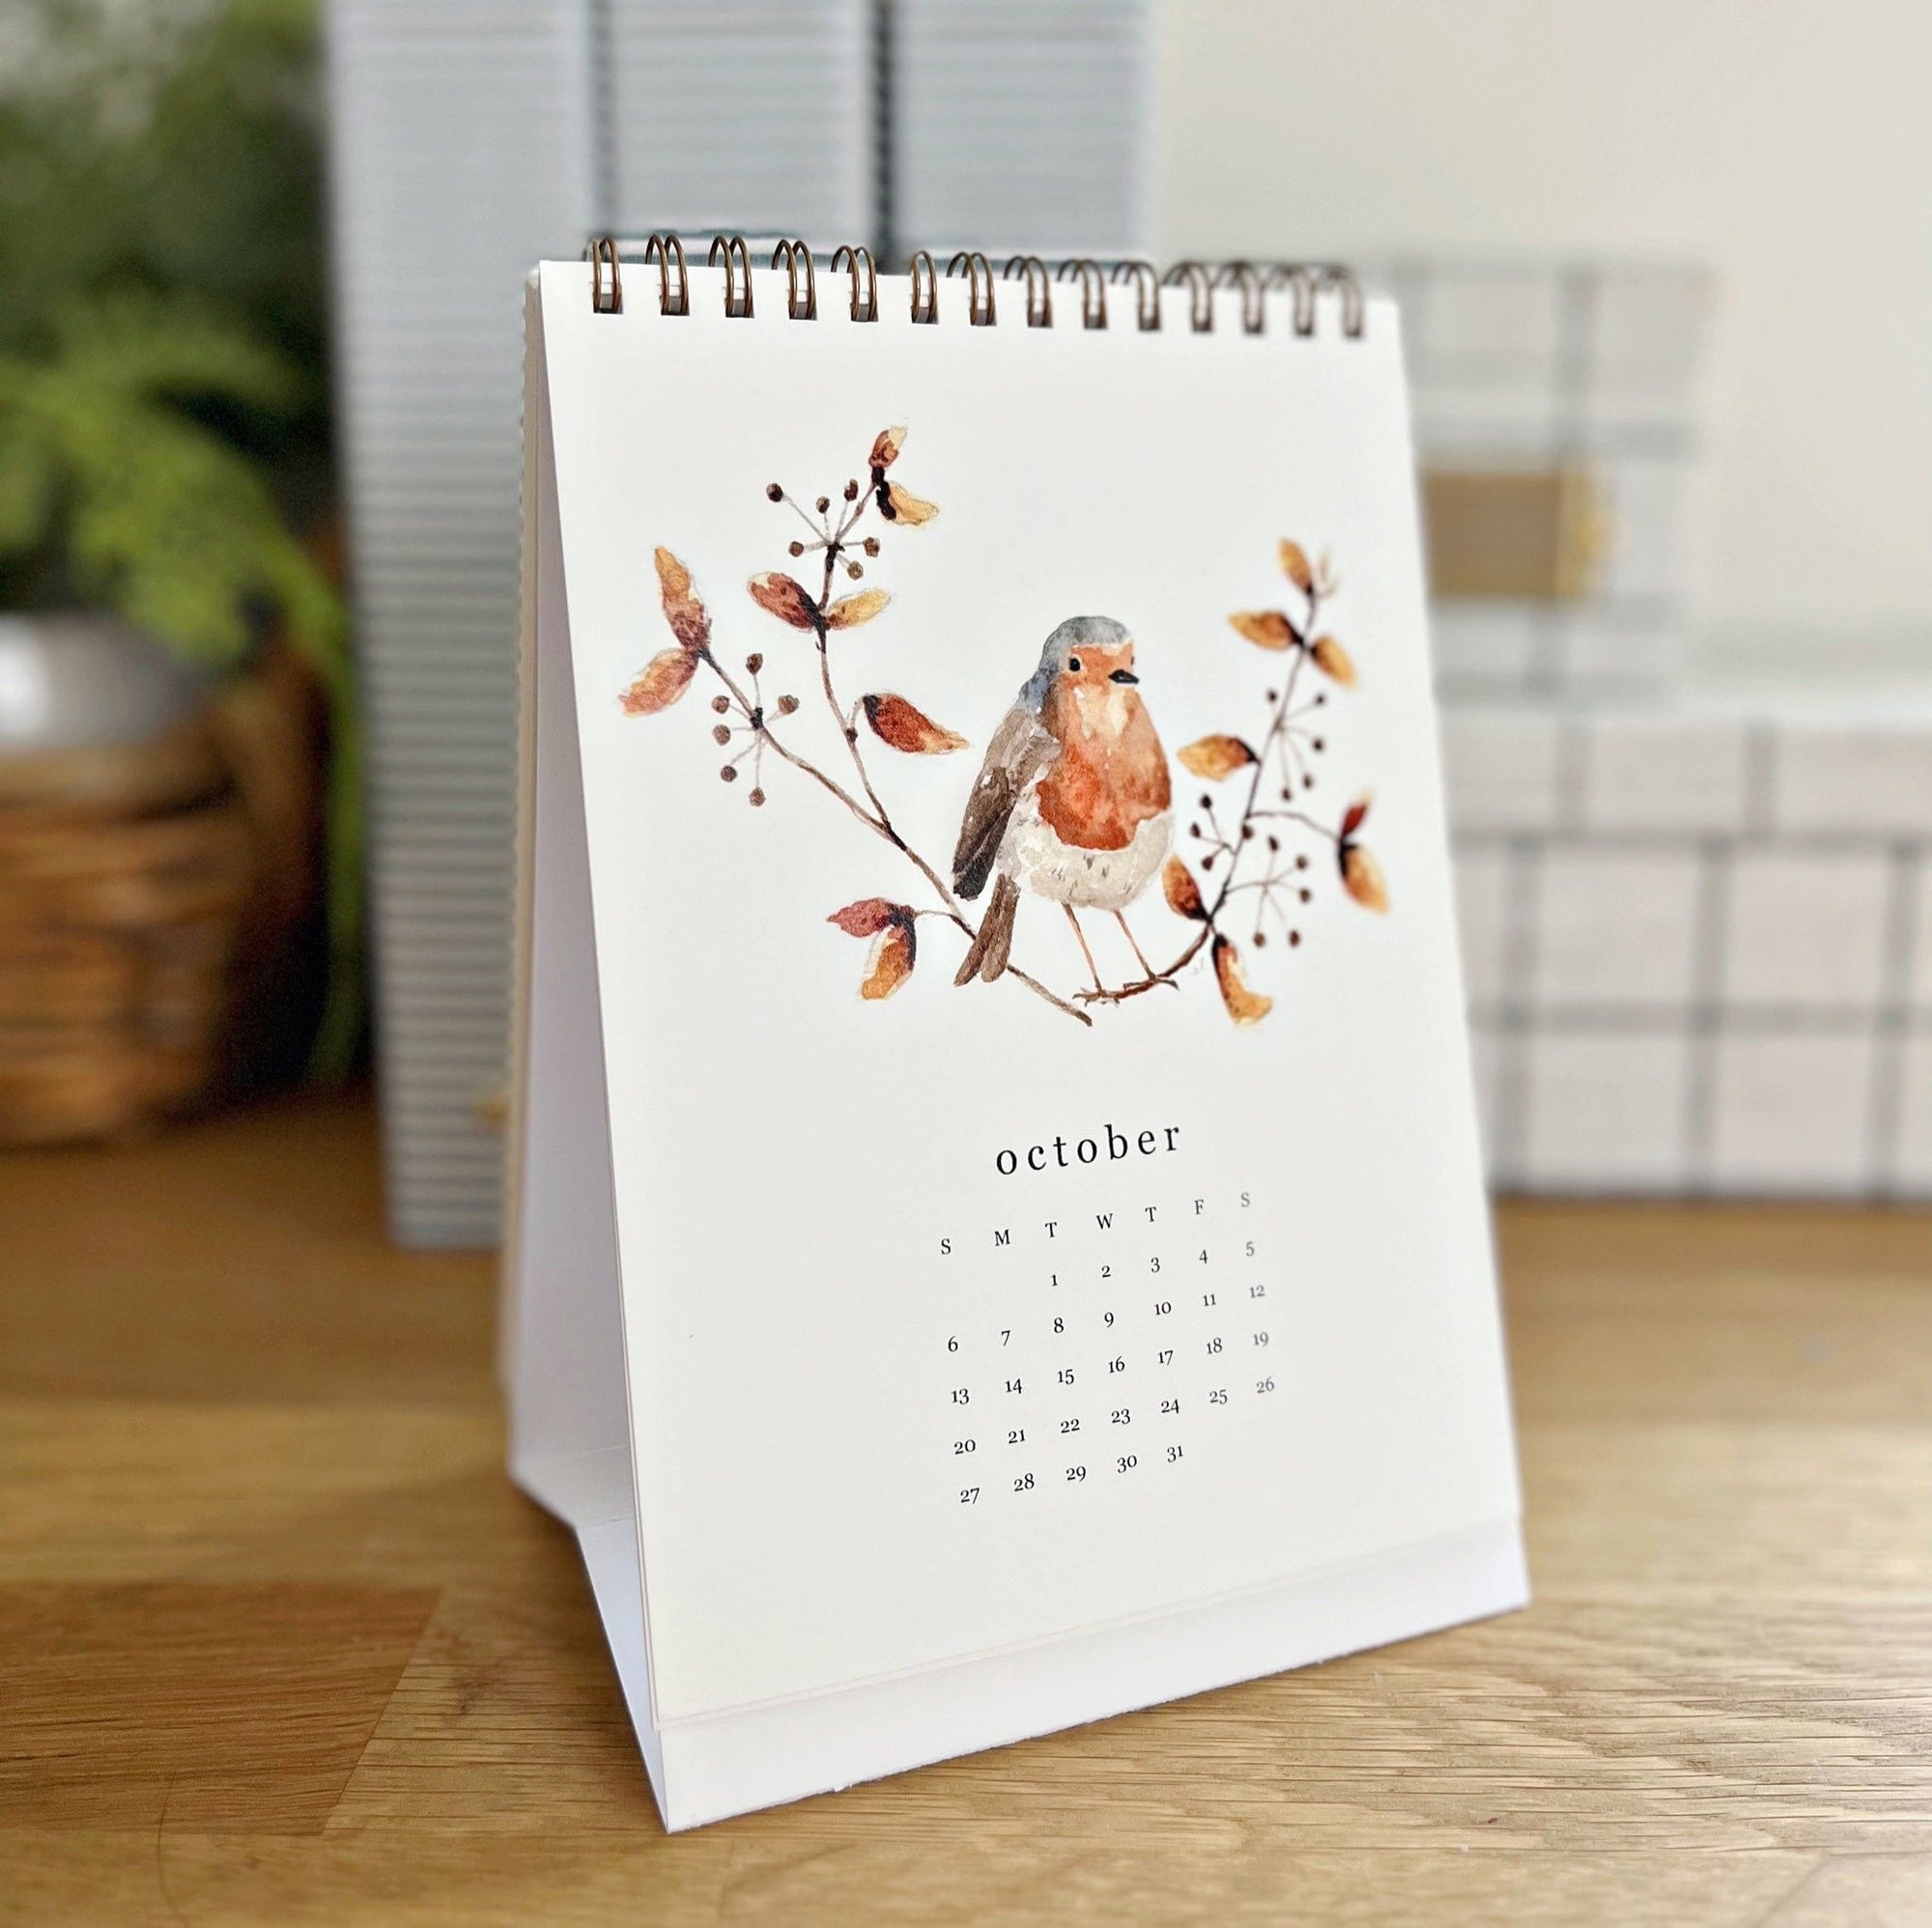 2024 birds & branches desk calendar - emily lex studio